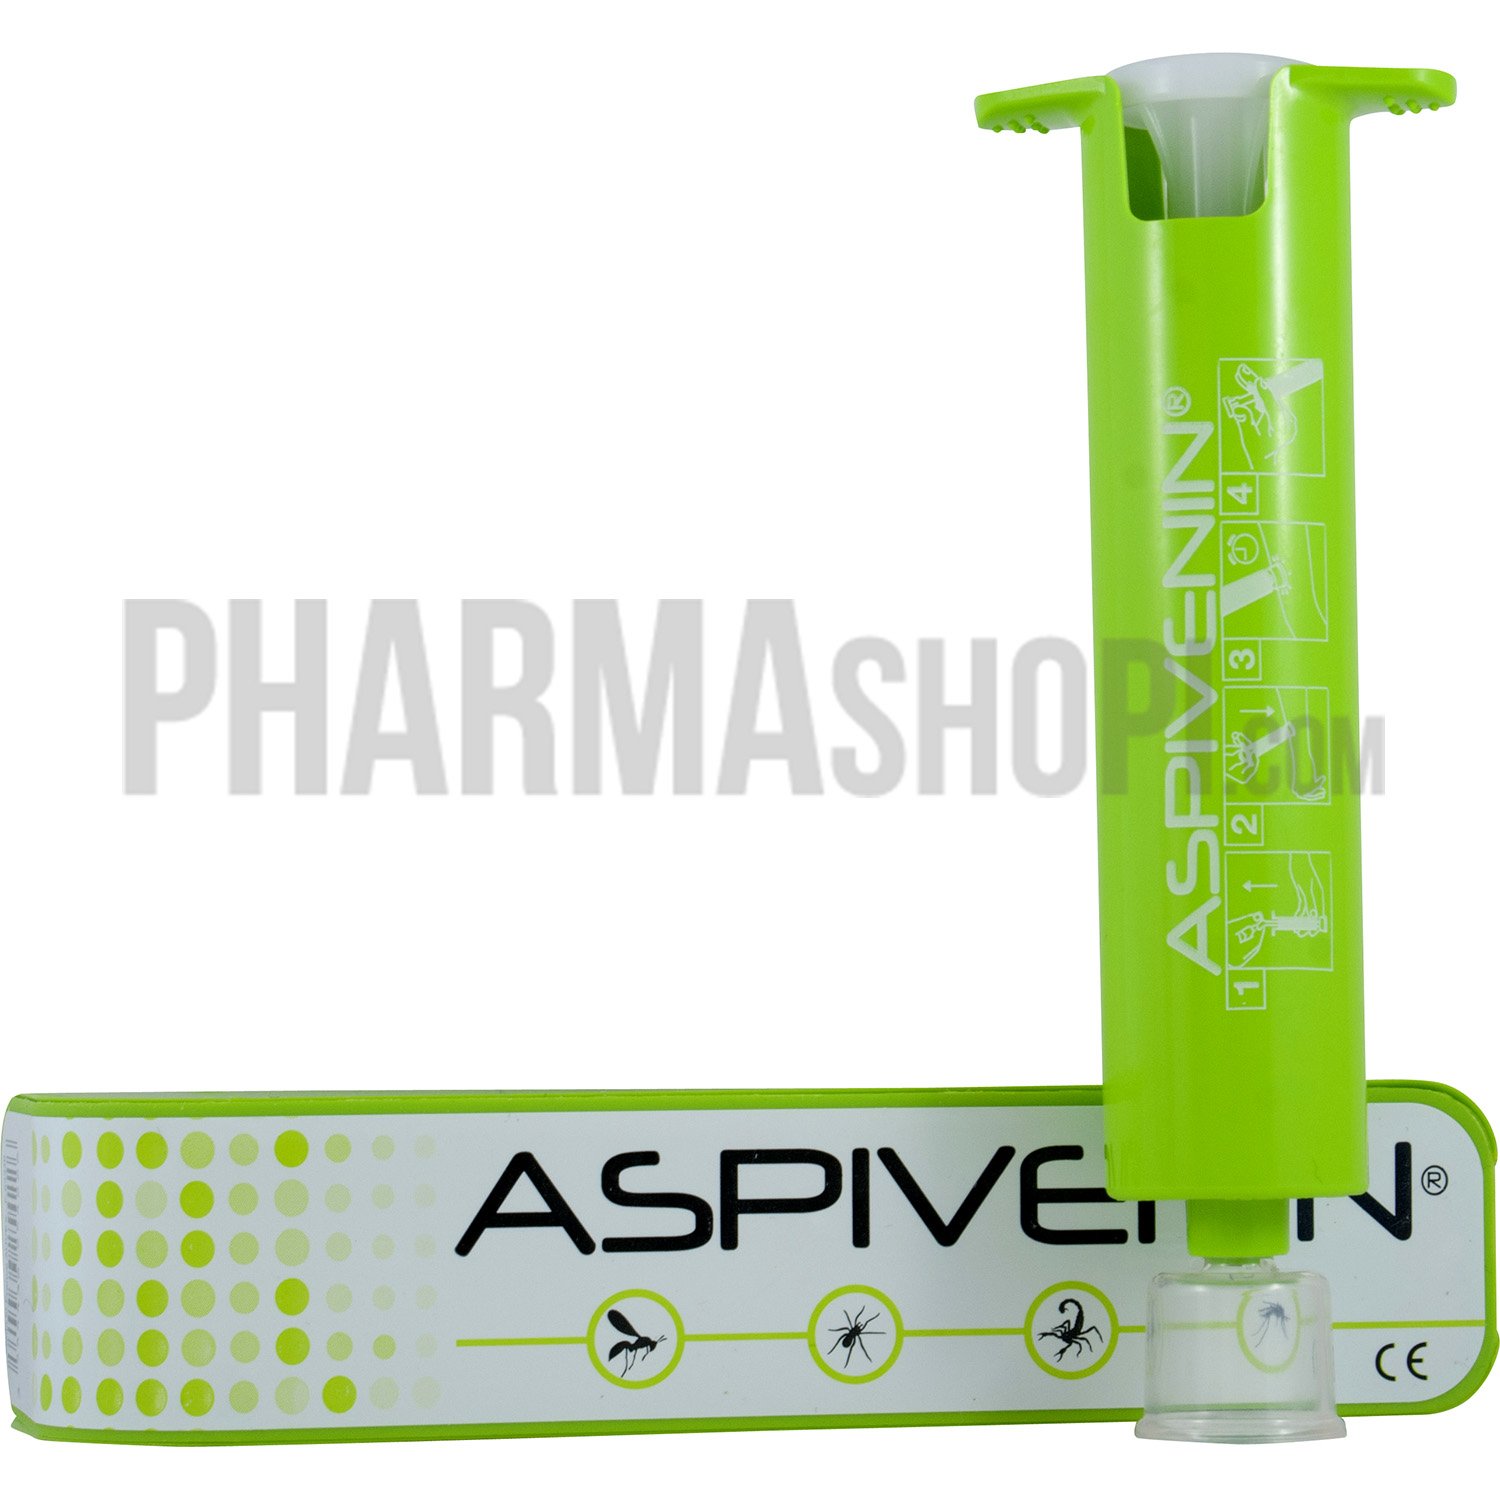 Aspivenin : le geste d'urgence anti-venin - Pompe anti-venin - Robé vente  matériel médical